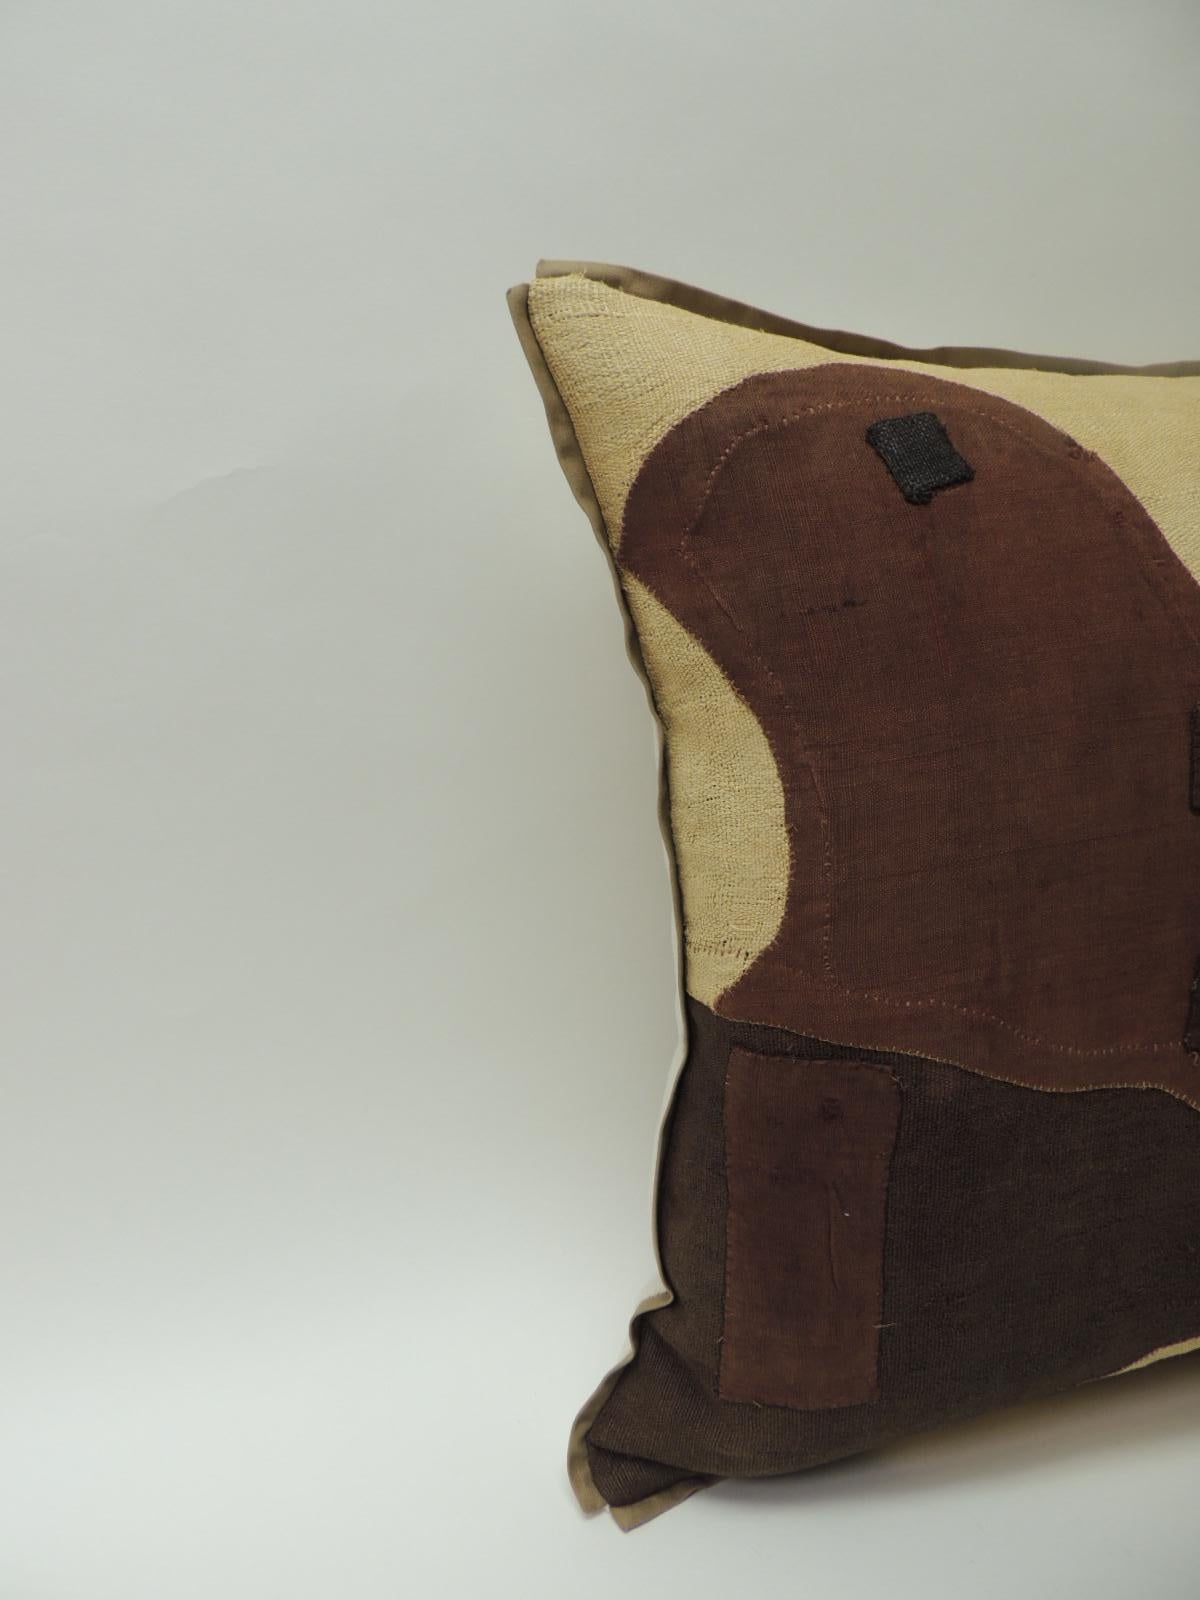 Tribal Applique Raffia Brown and Black Kuba Decorative Pillows Matisse Style